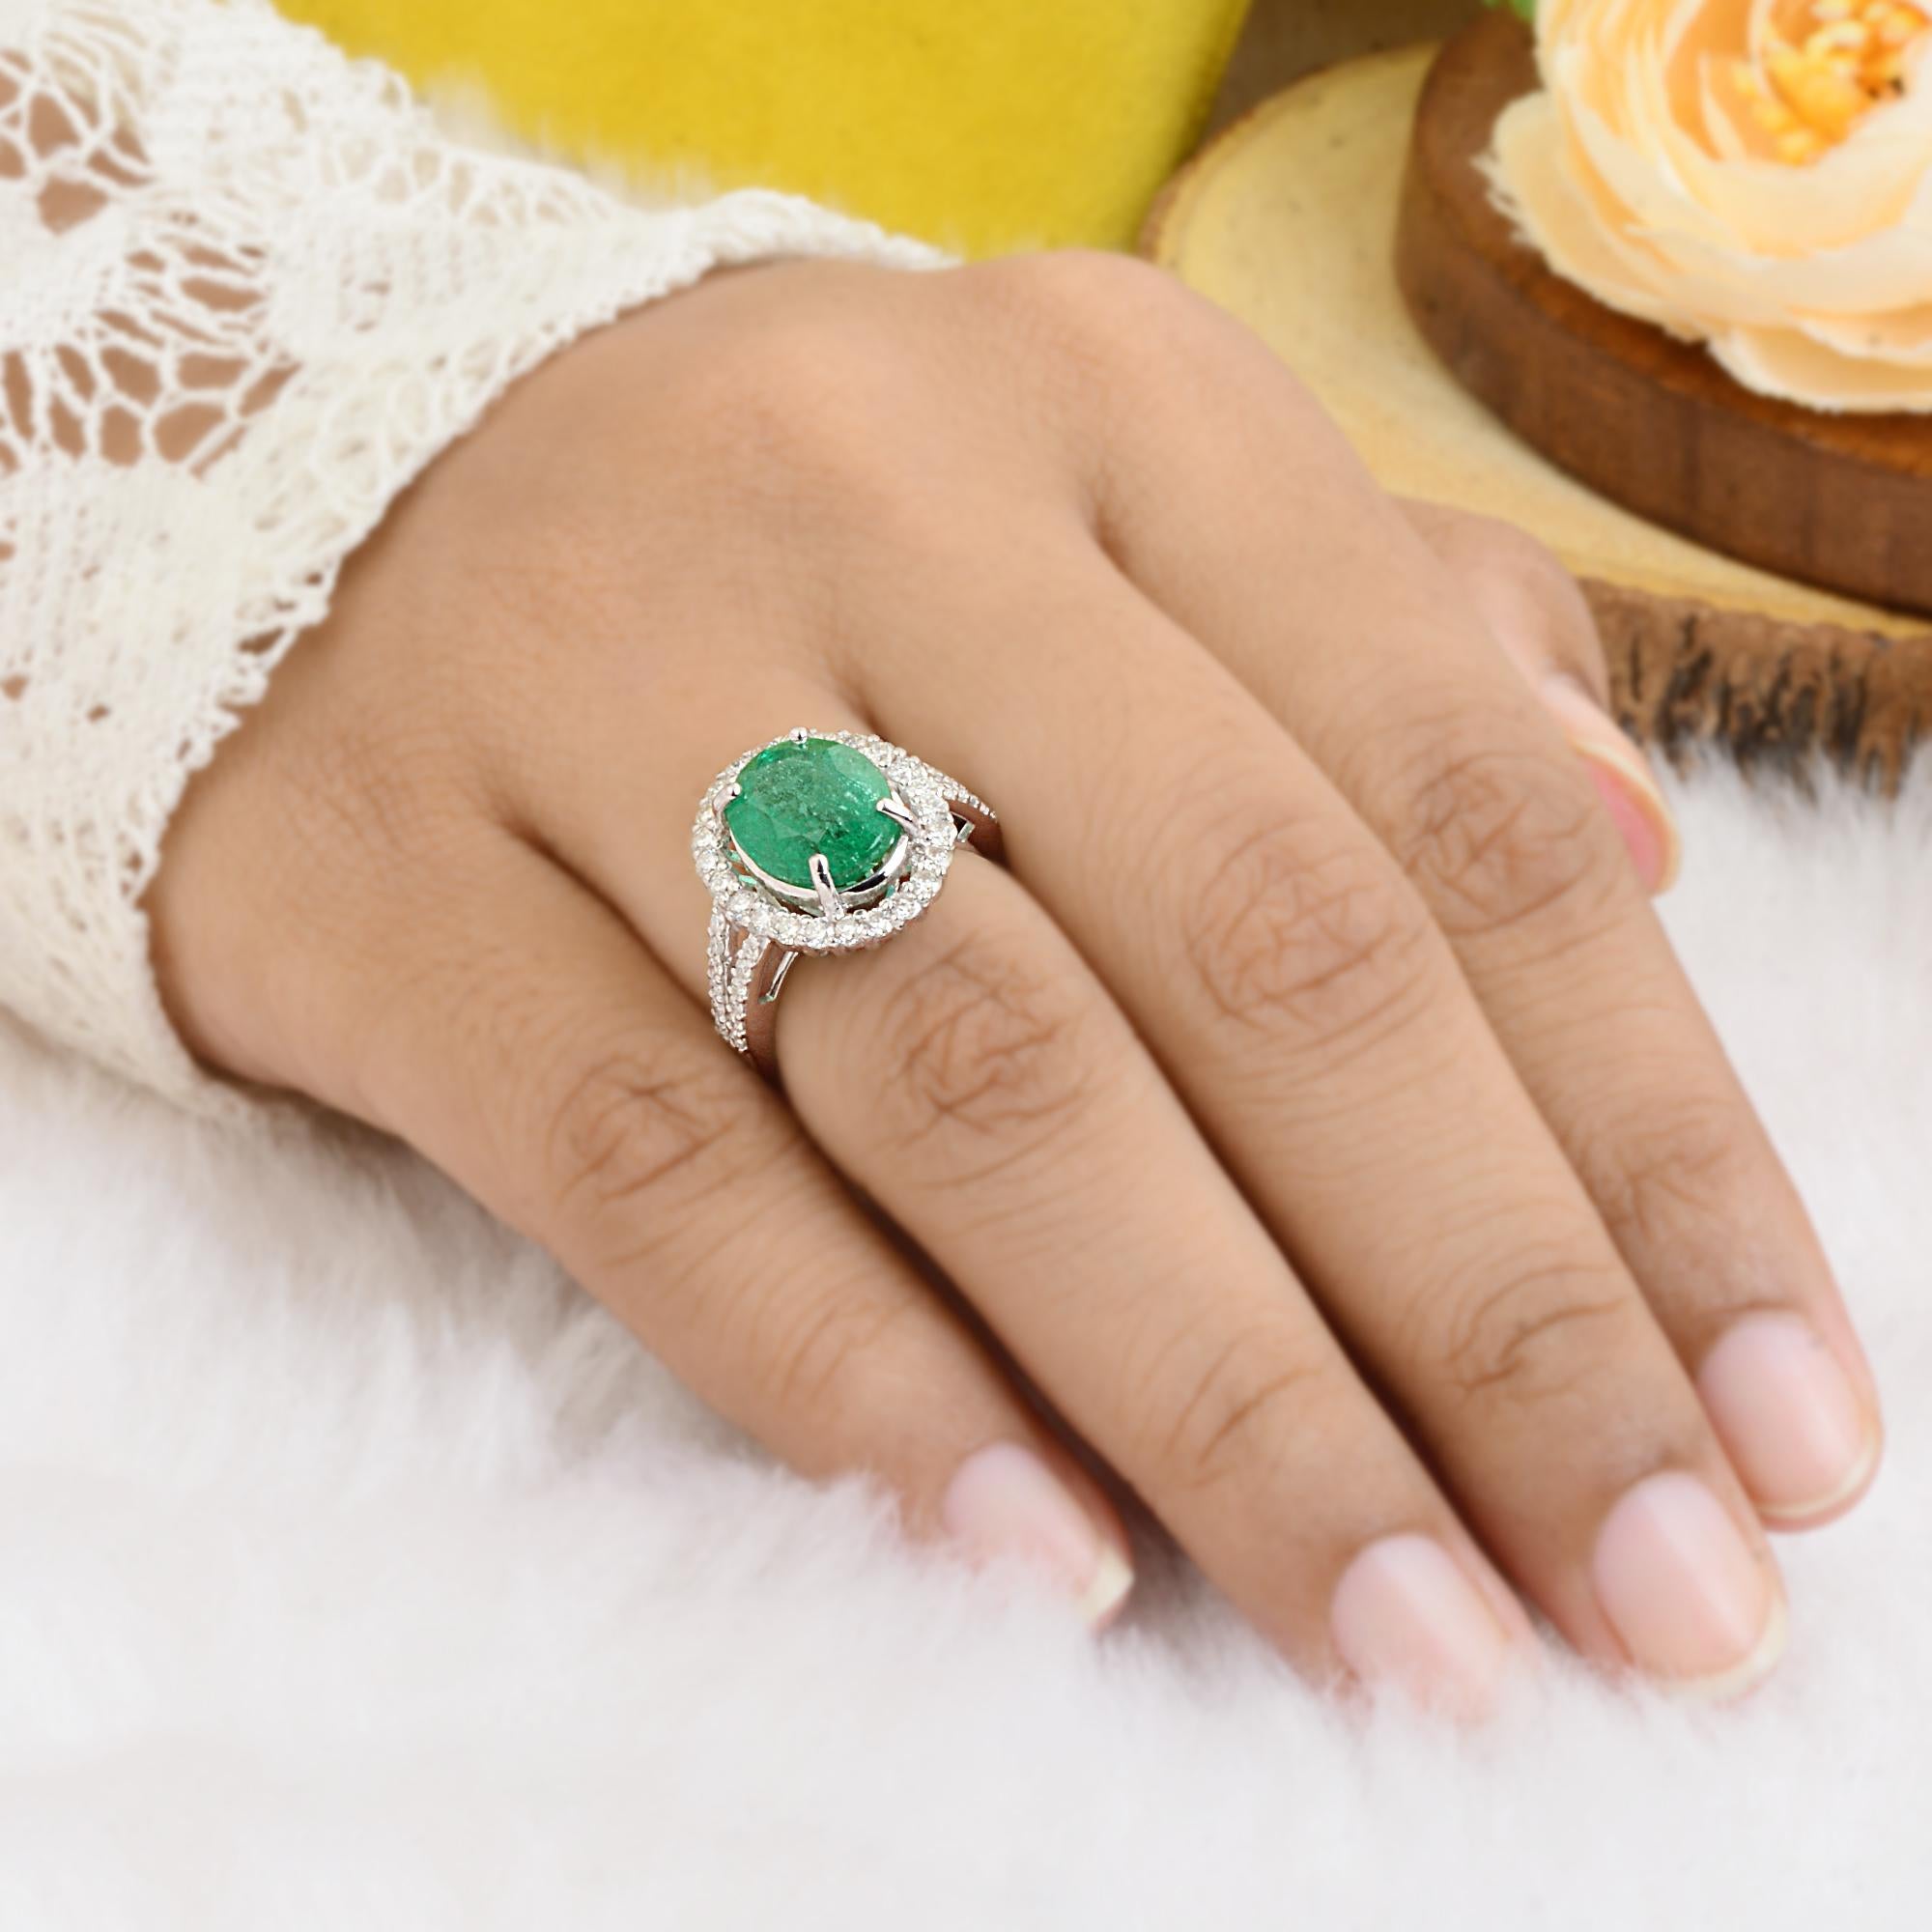 Oval Cut Oval Shape Emerald Gemstone Cocktail Ring Diamond 10 Karat White Gold Jewelry For Sale